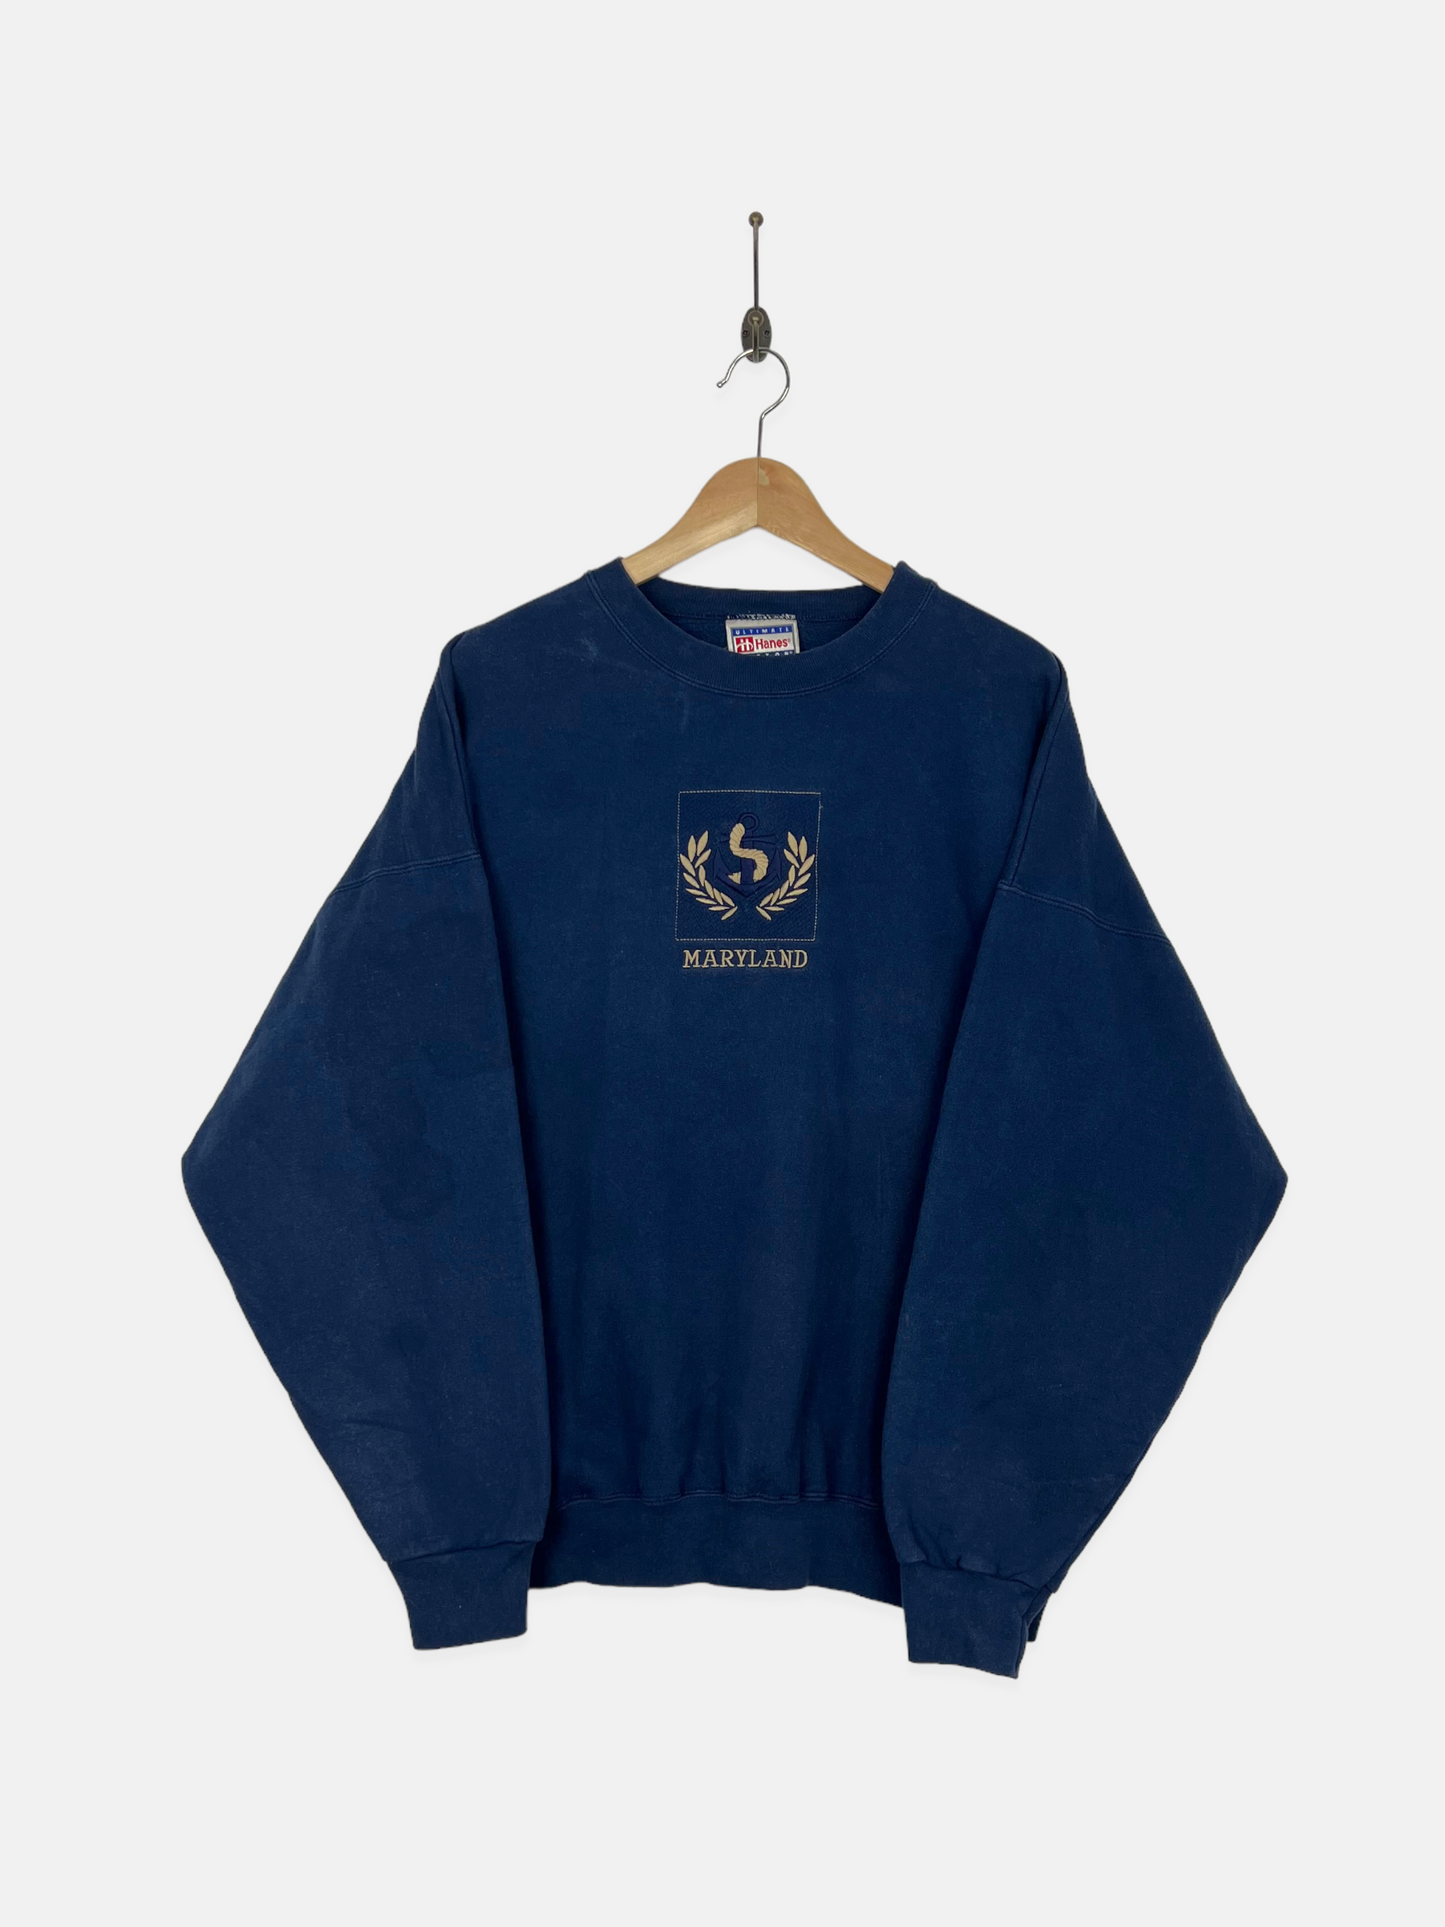 90's Maryland Embroidered Vintage Sweatshirt Size M-L